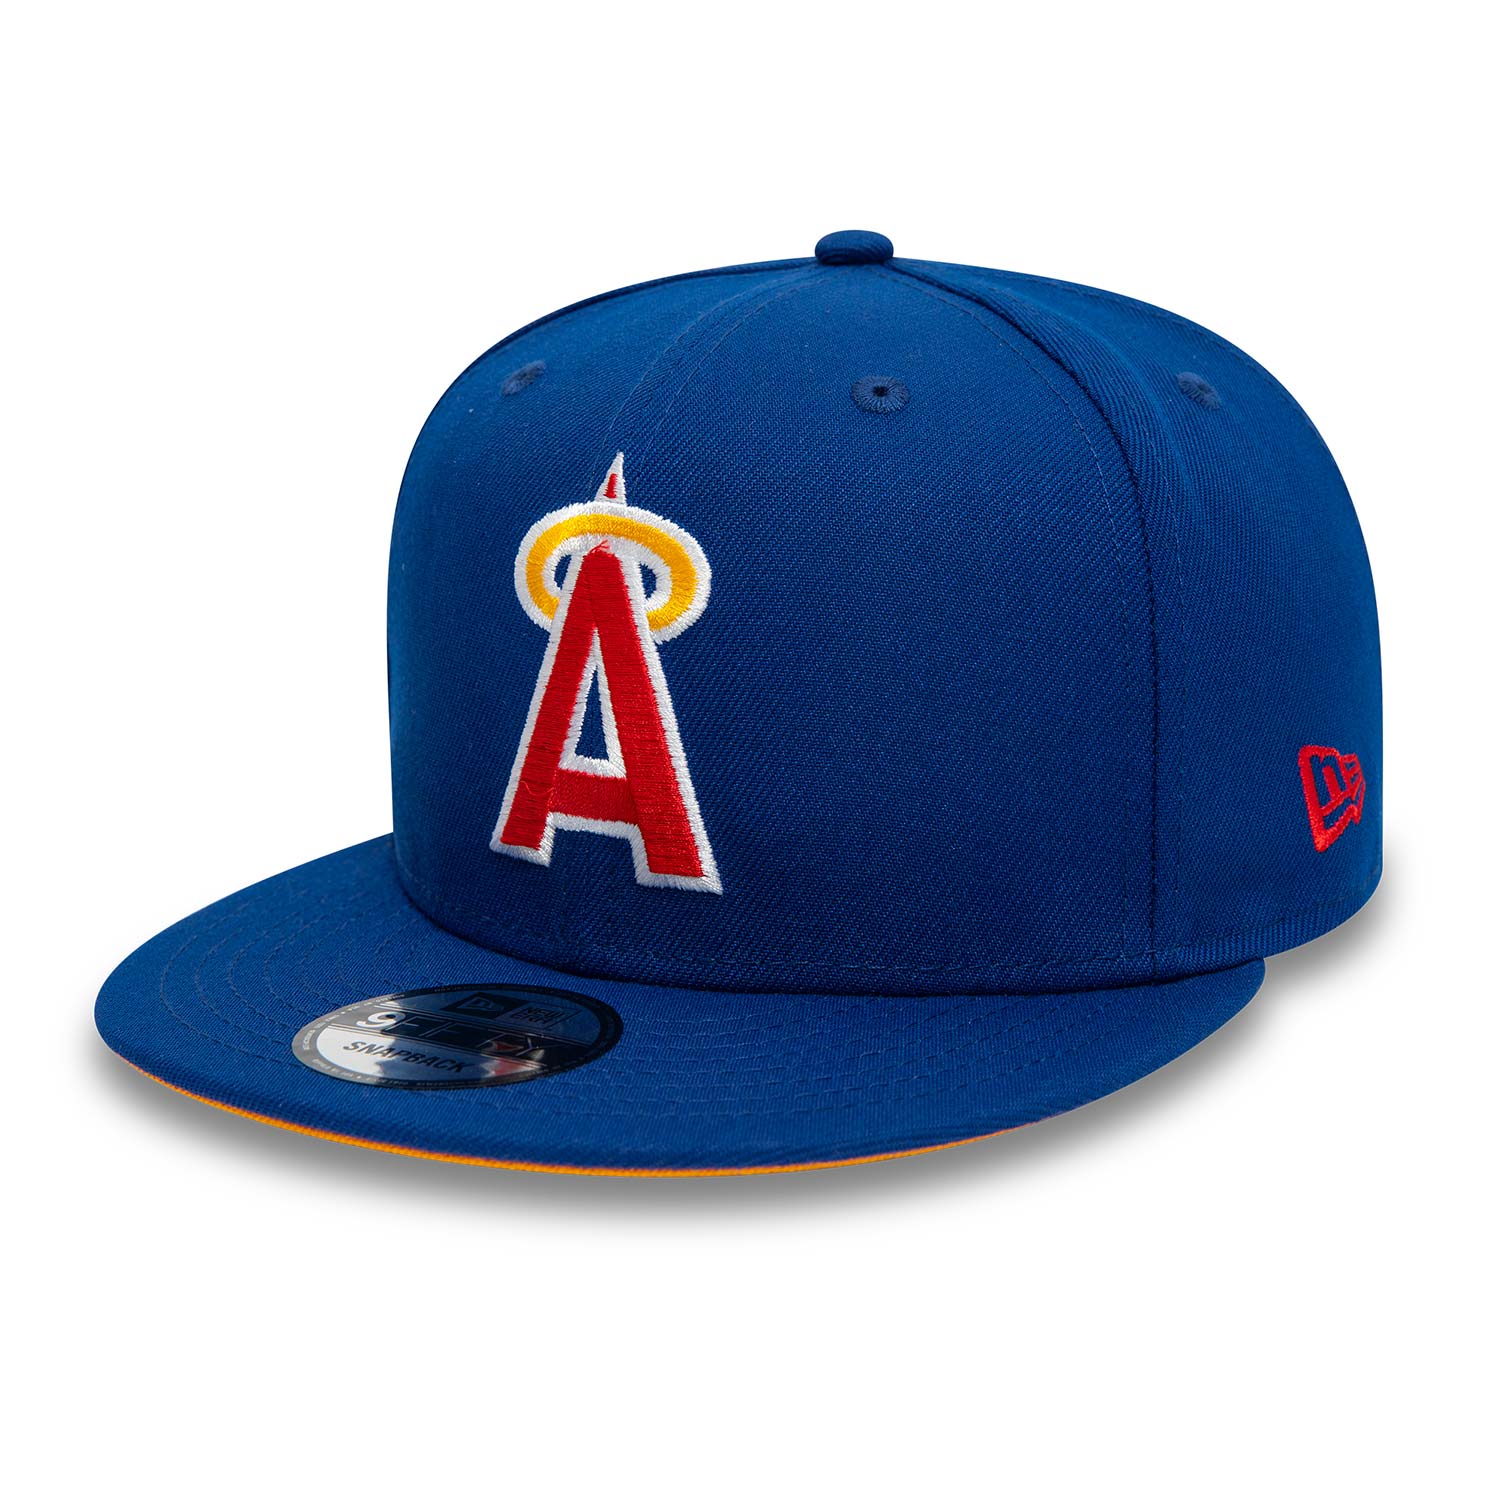 LA Angels All Star Game Blue 9FIFTY Snapback Cap